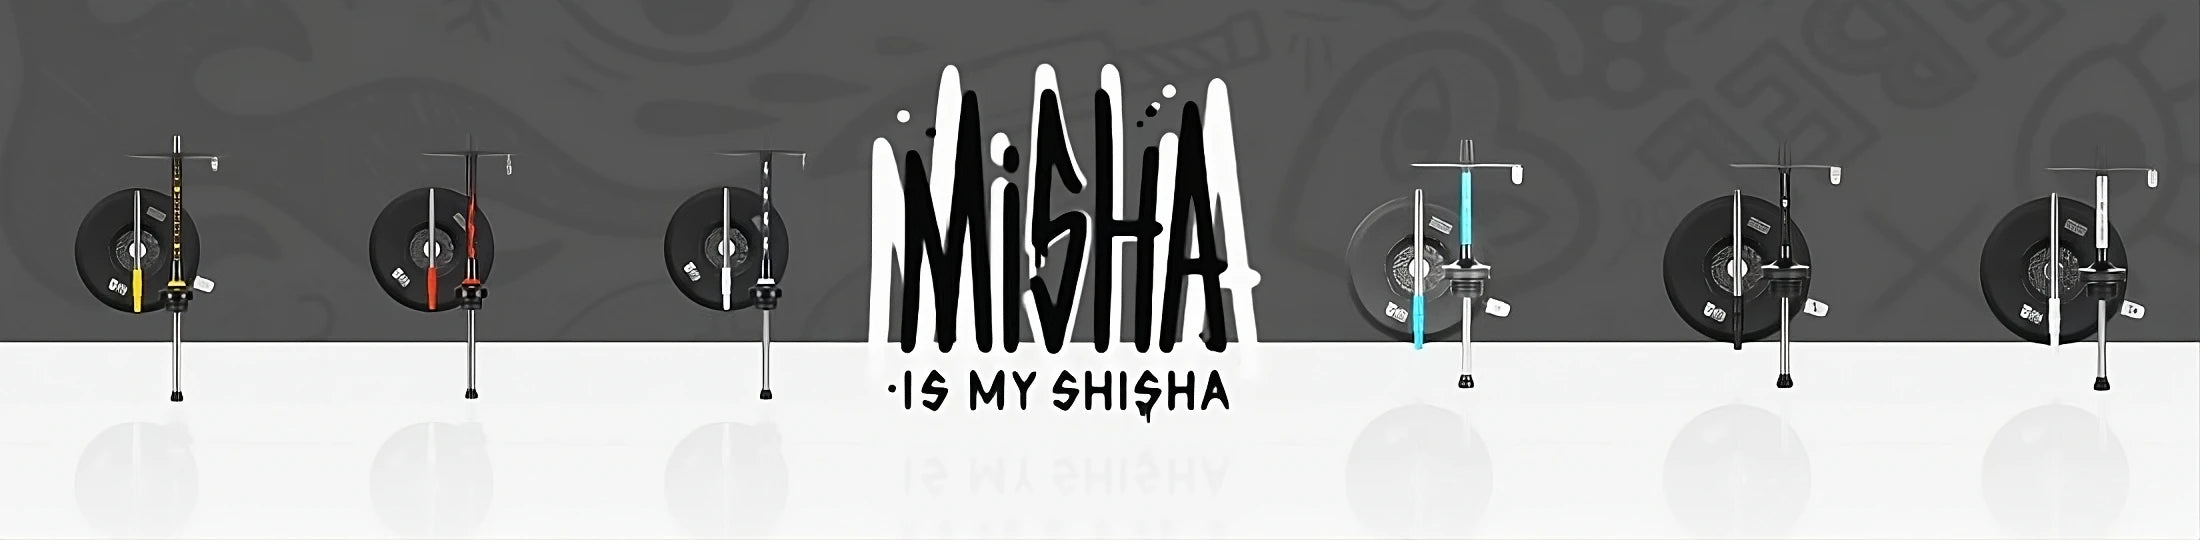 Misha Banner Colection